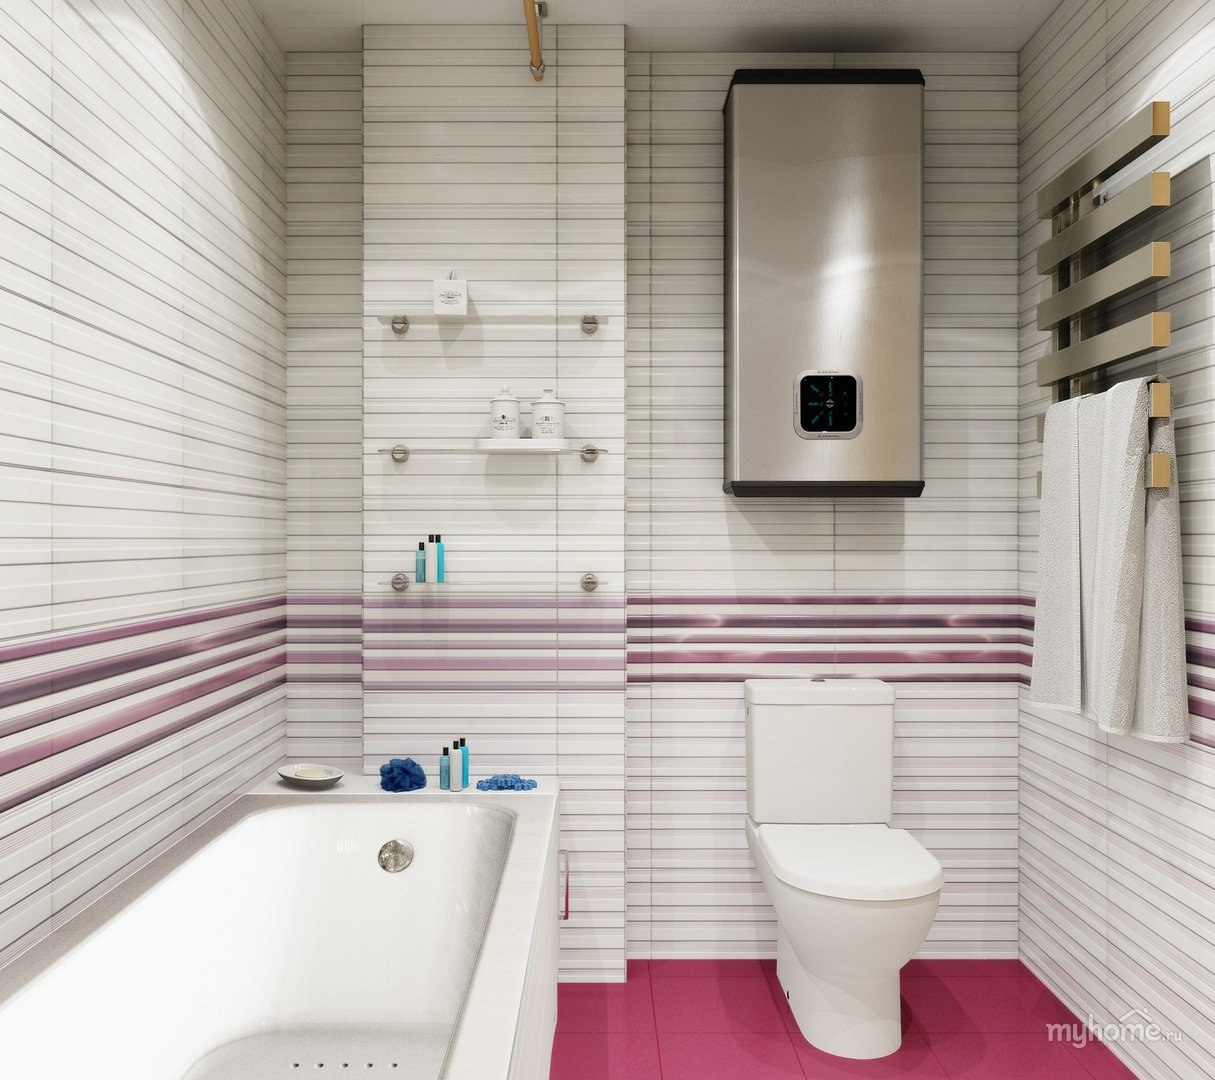 ванна в двух цветах фото